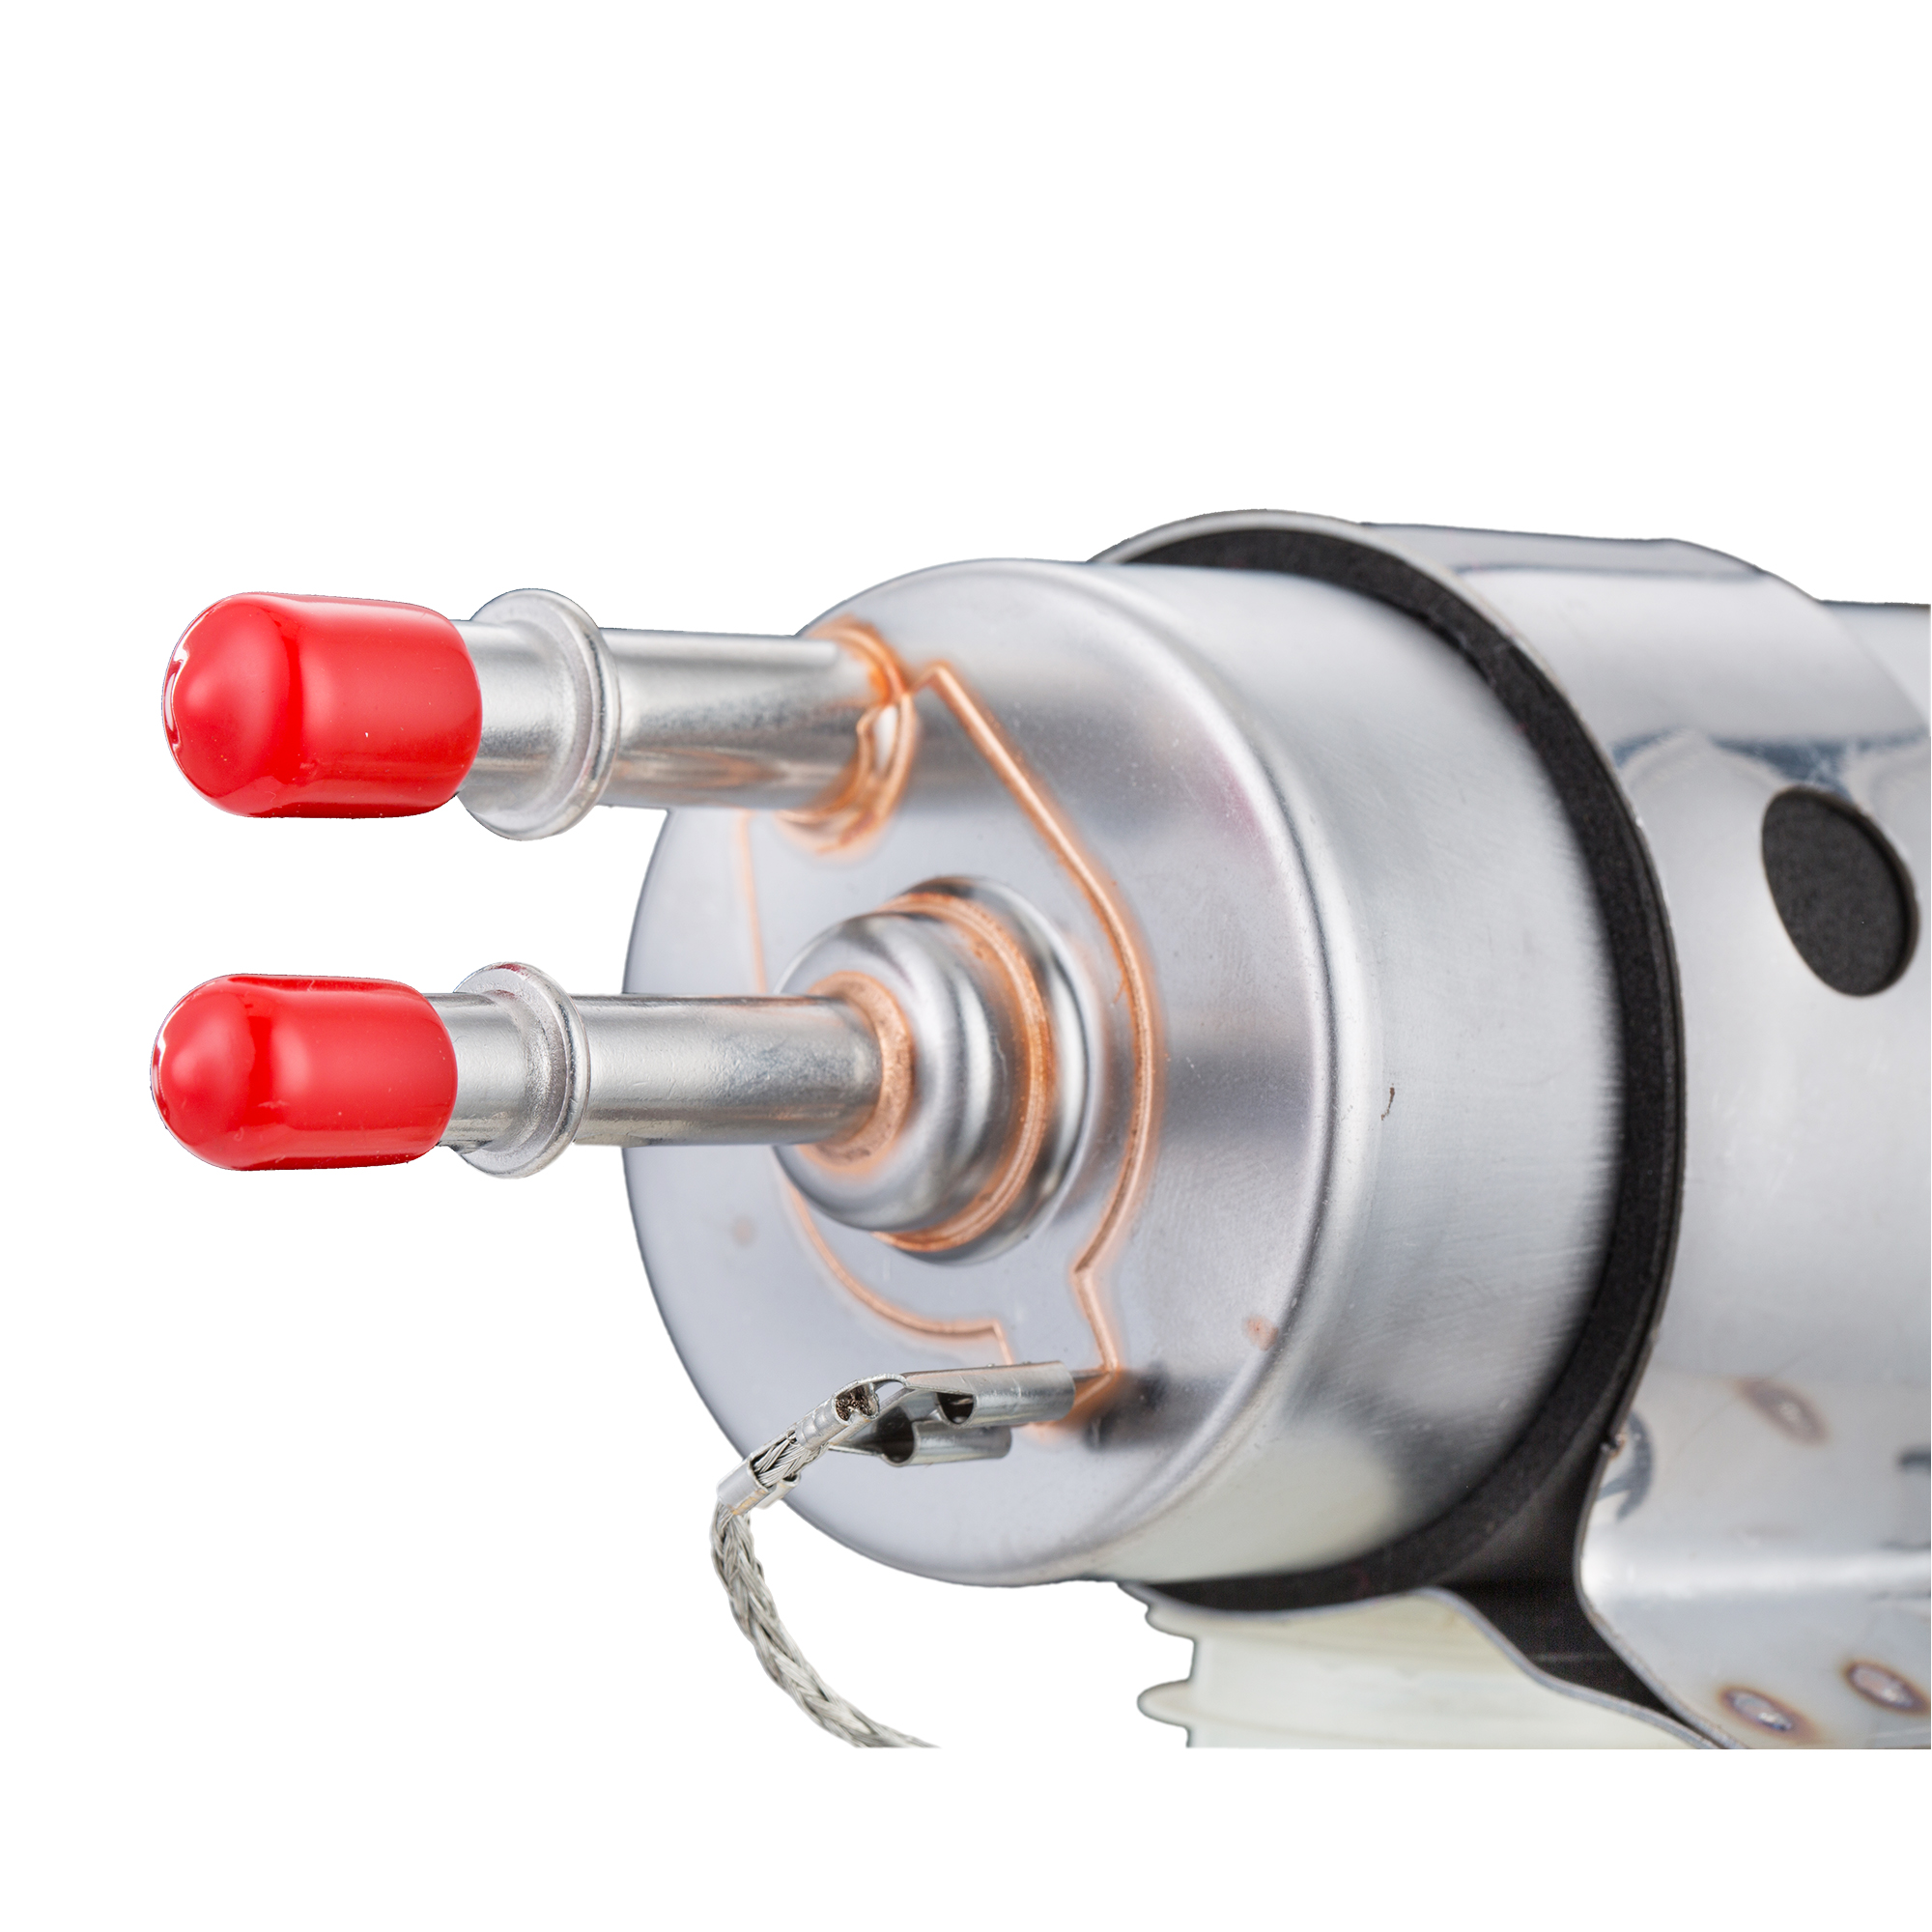 HaoFa Fuel Pressure Regulator Engine Oil/Fuel Filter Suit for EFI Conversion or LS Engines